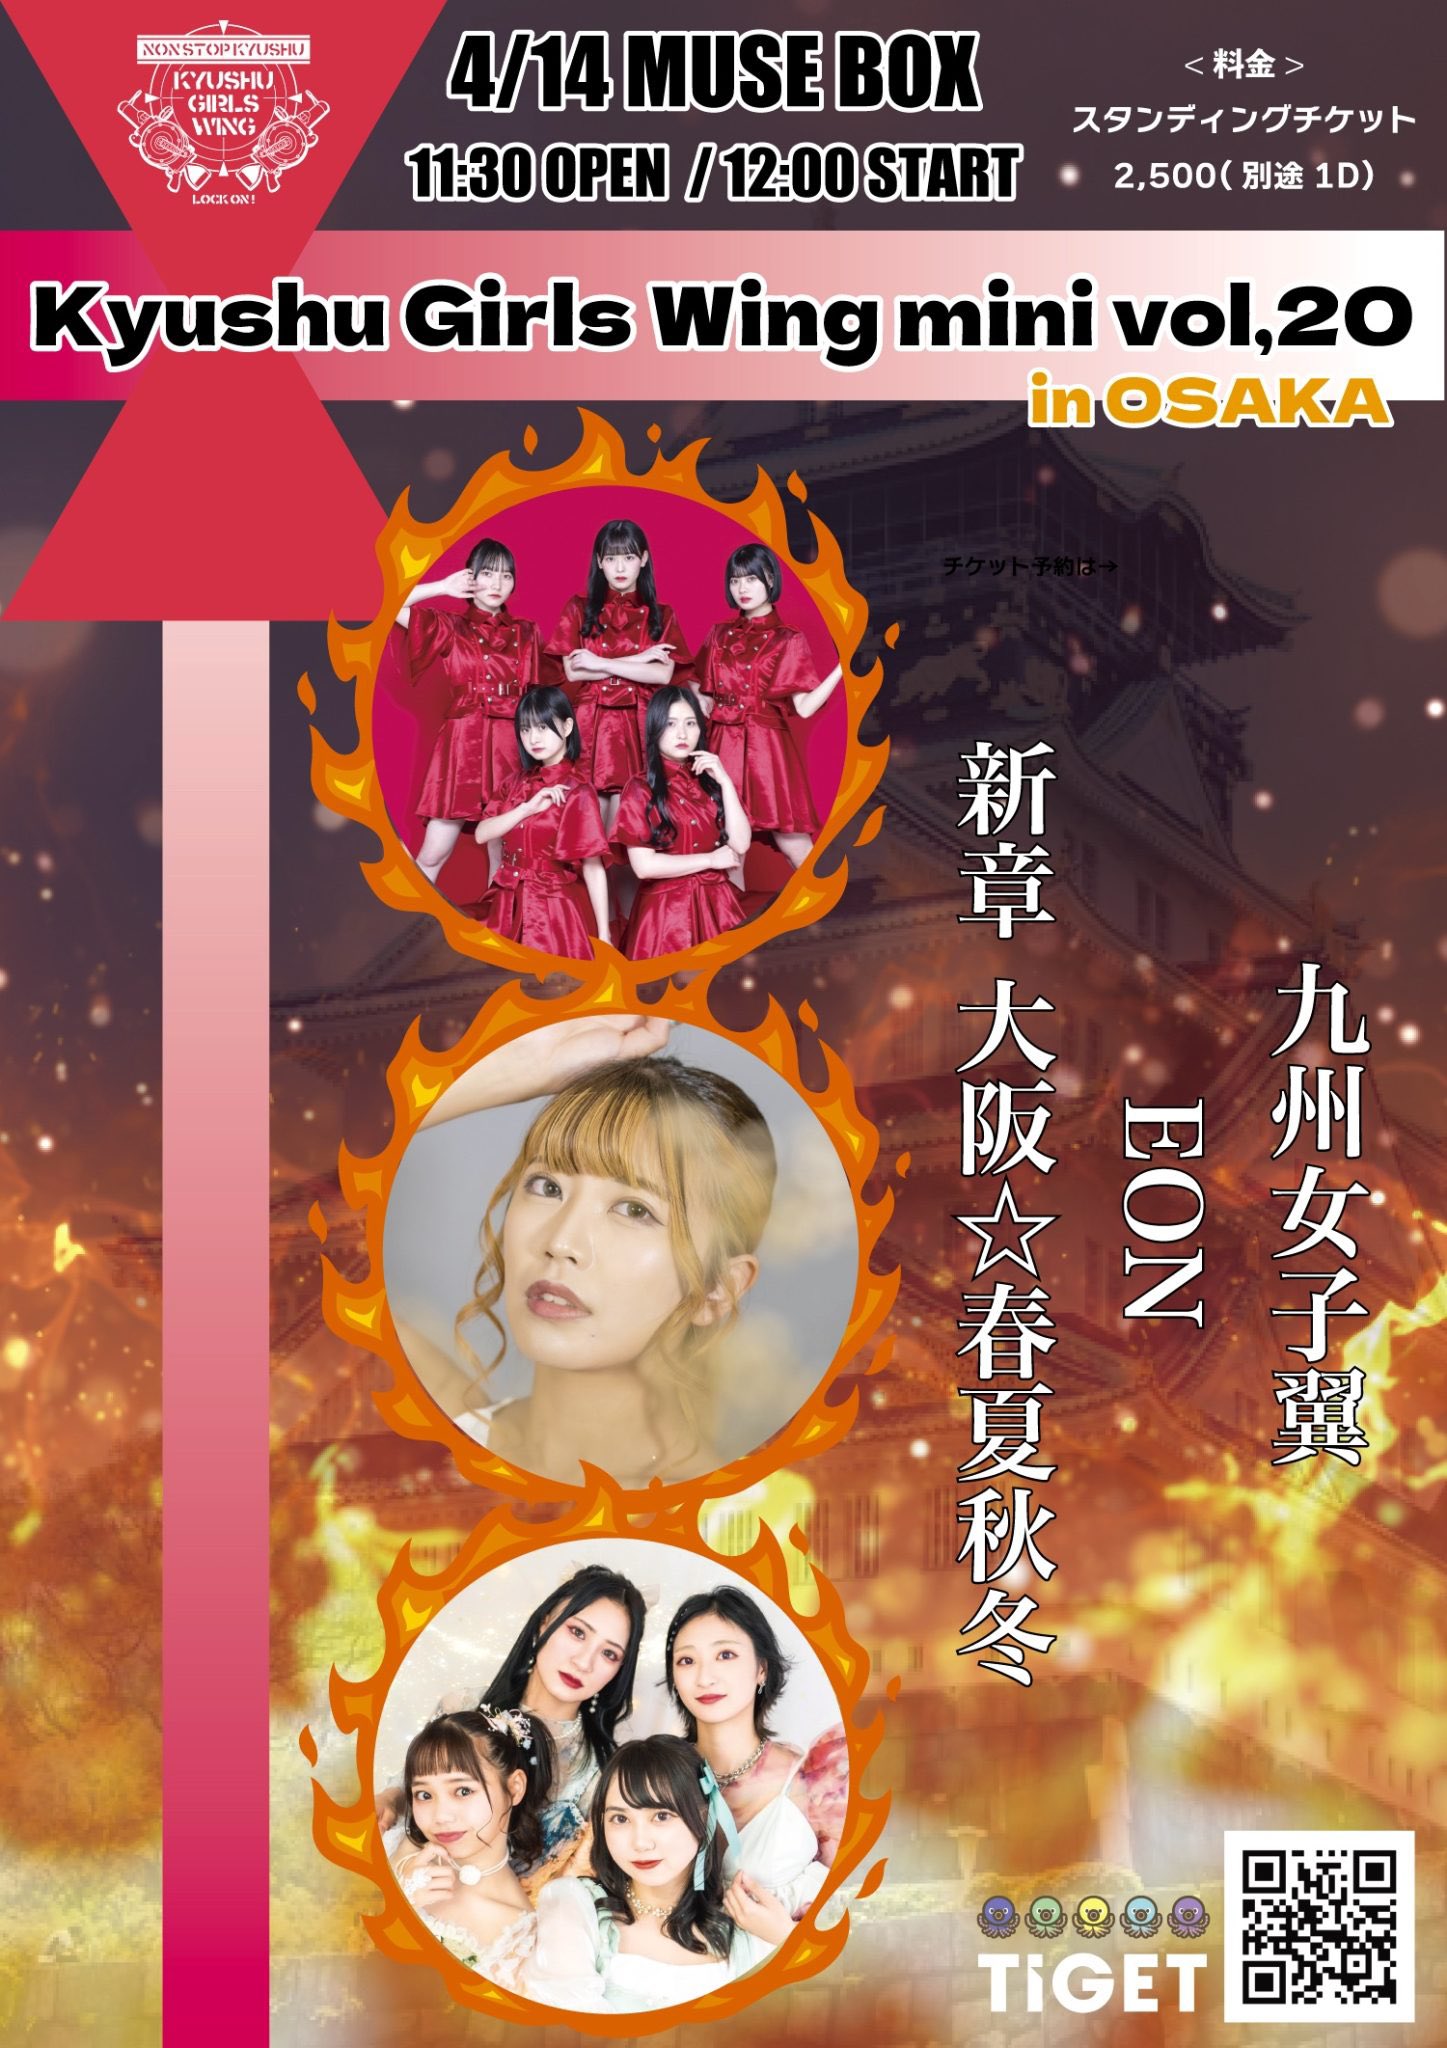 Kyushu Girls Wing mini vol,20 in OSAKA